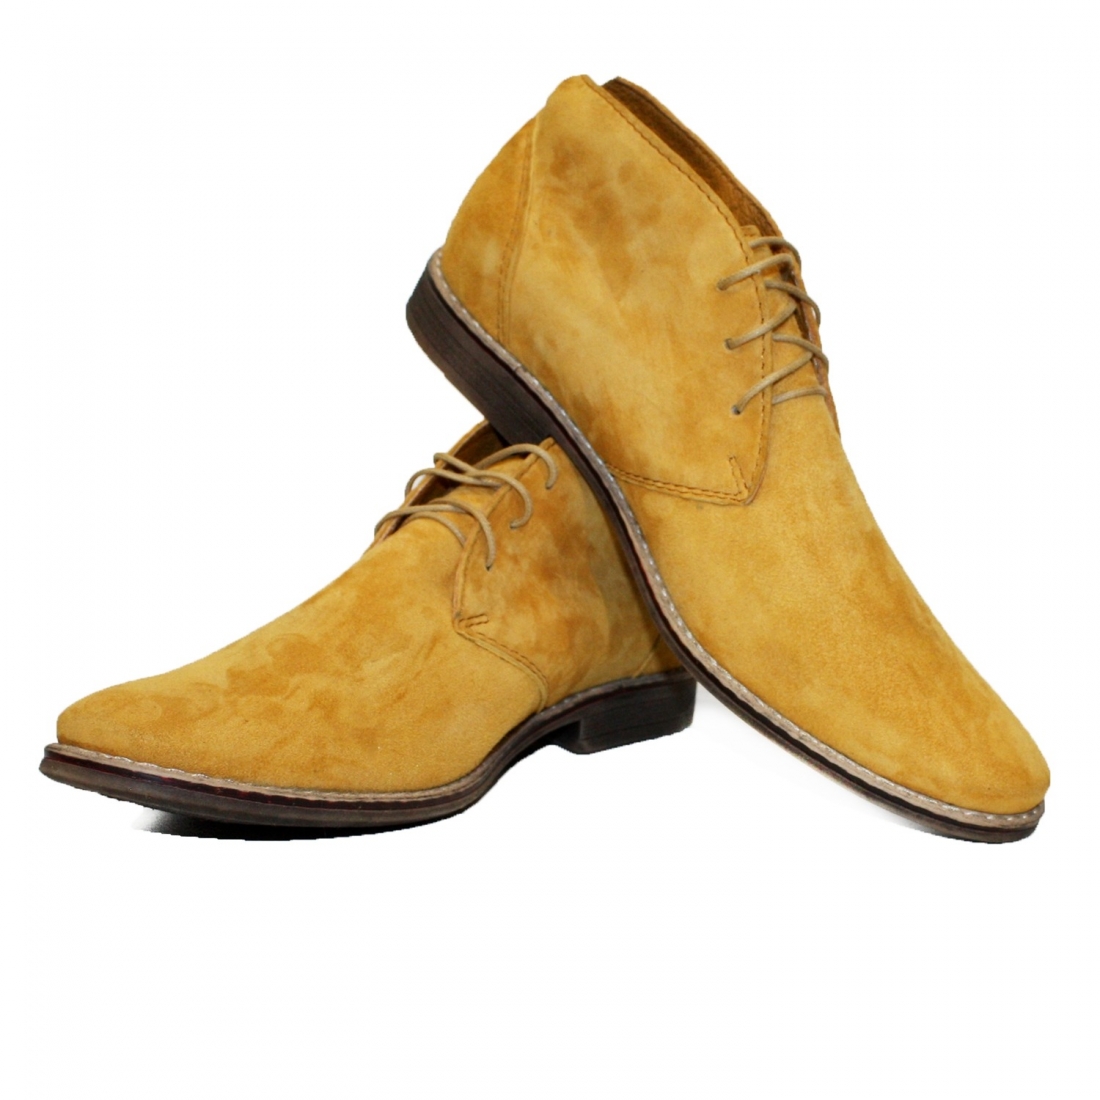 Modello Ciupcio - Chukka Boots - Handmade Colorful Italian Leather Shoes